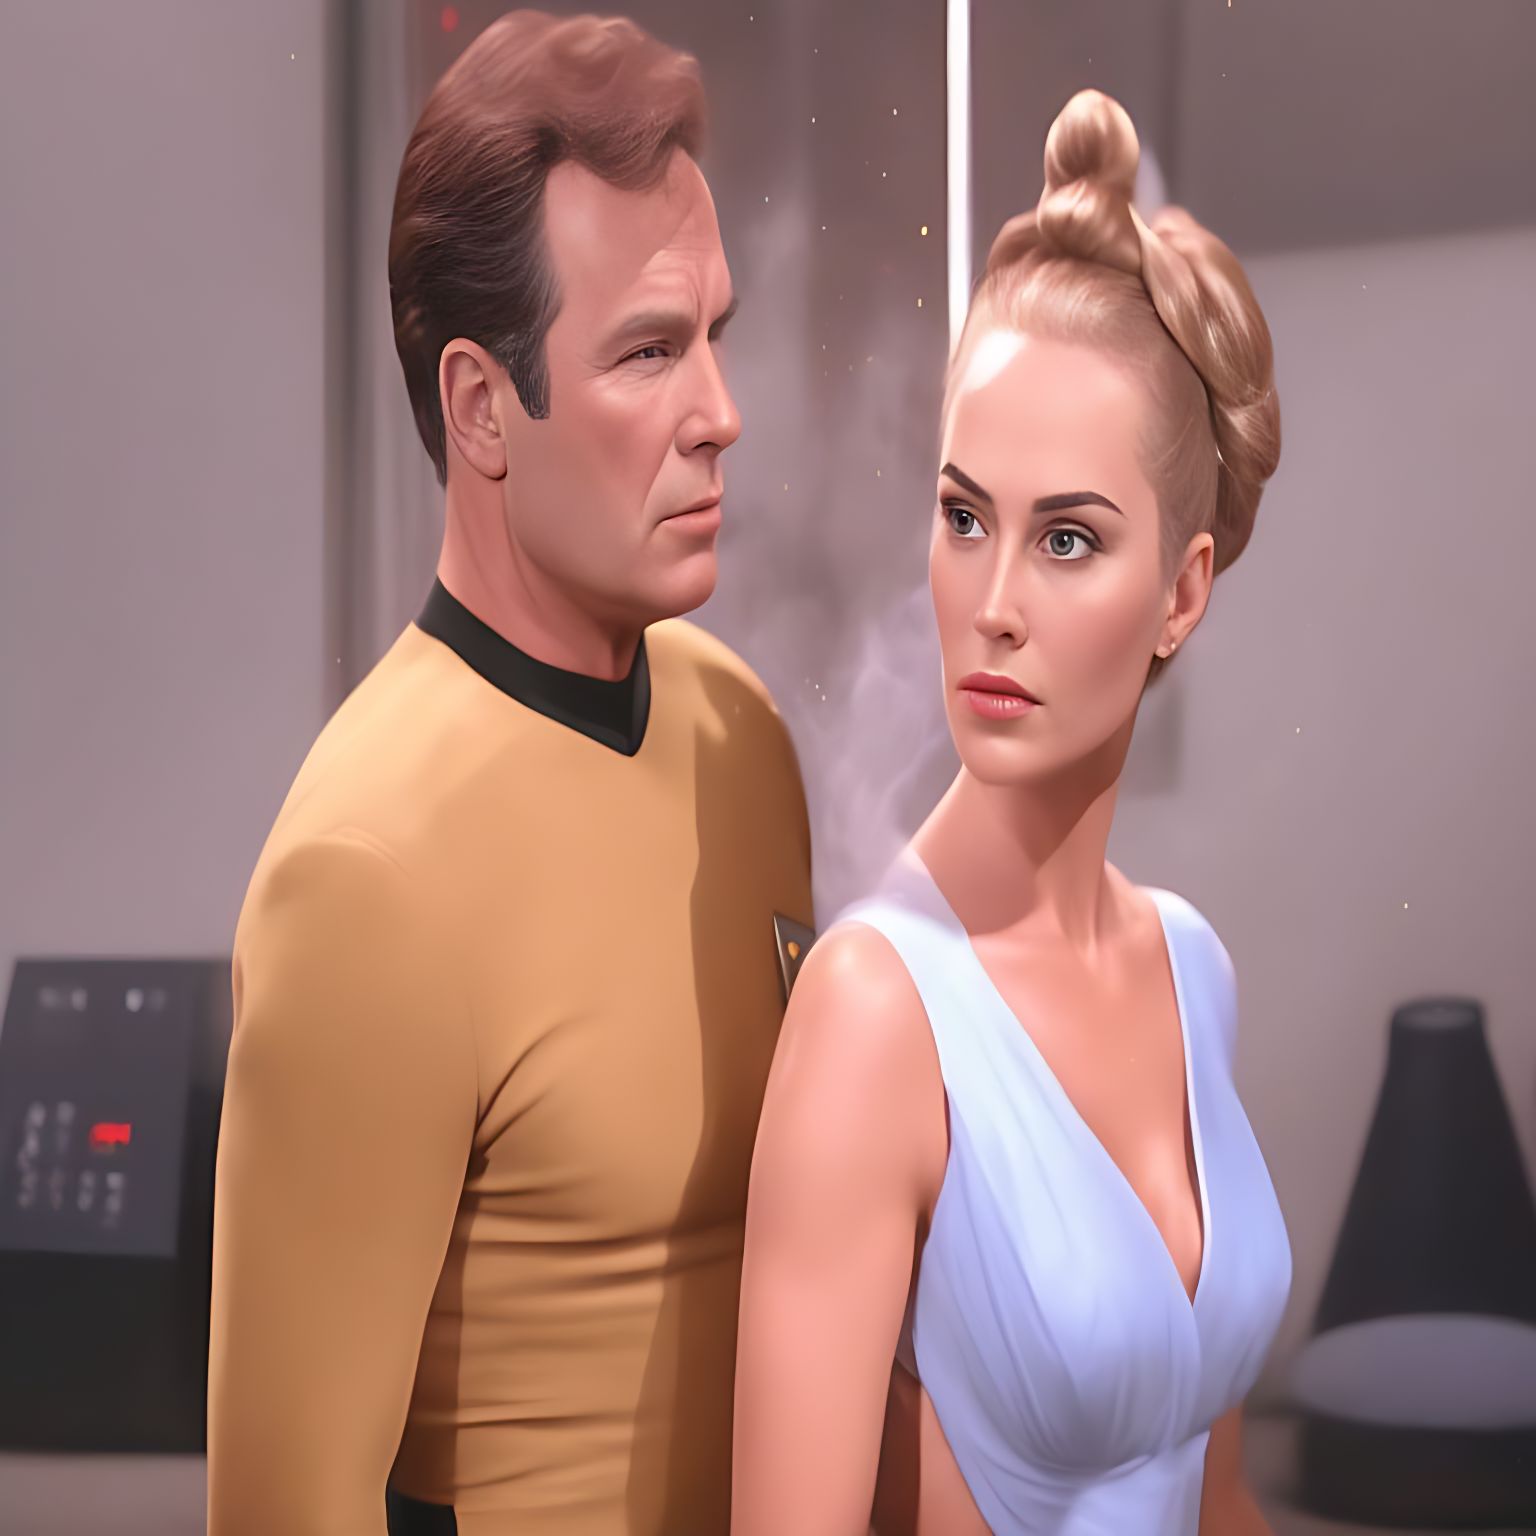 Myndcruzer Wonder Woman And Captain Kirk On The Enterprise 2 People